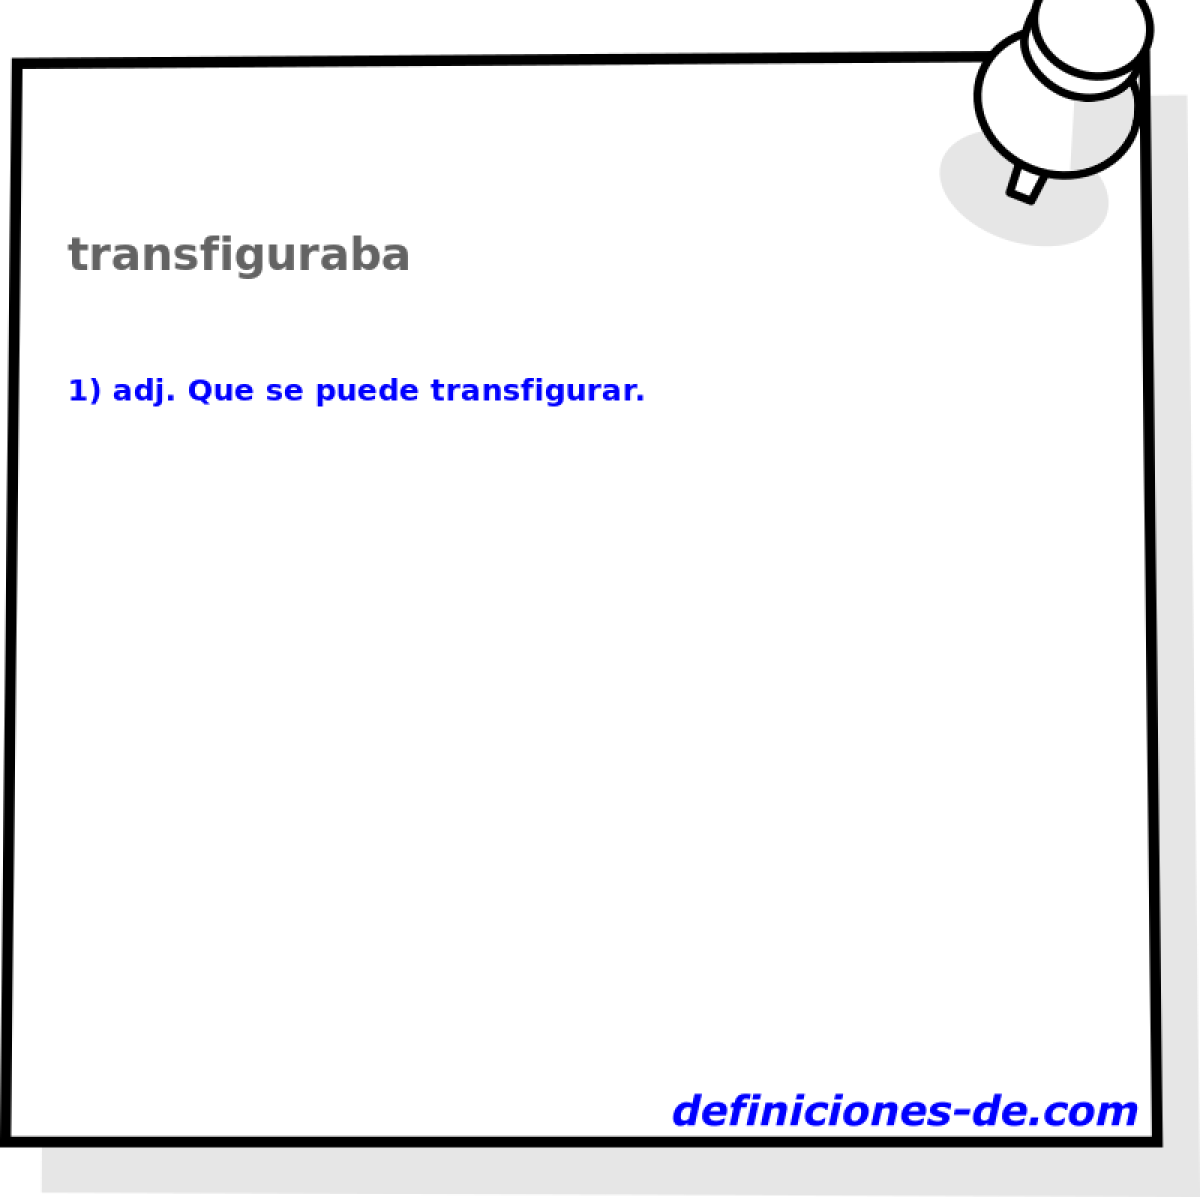 transfiguraba 